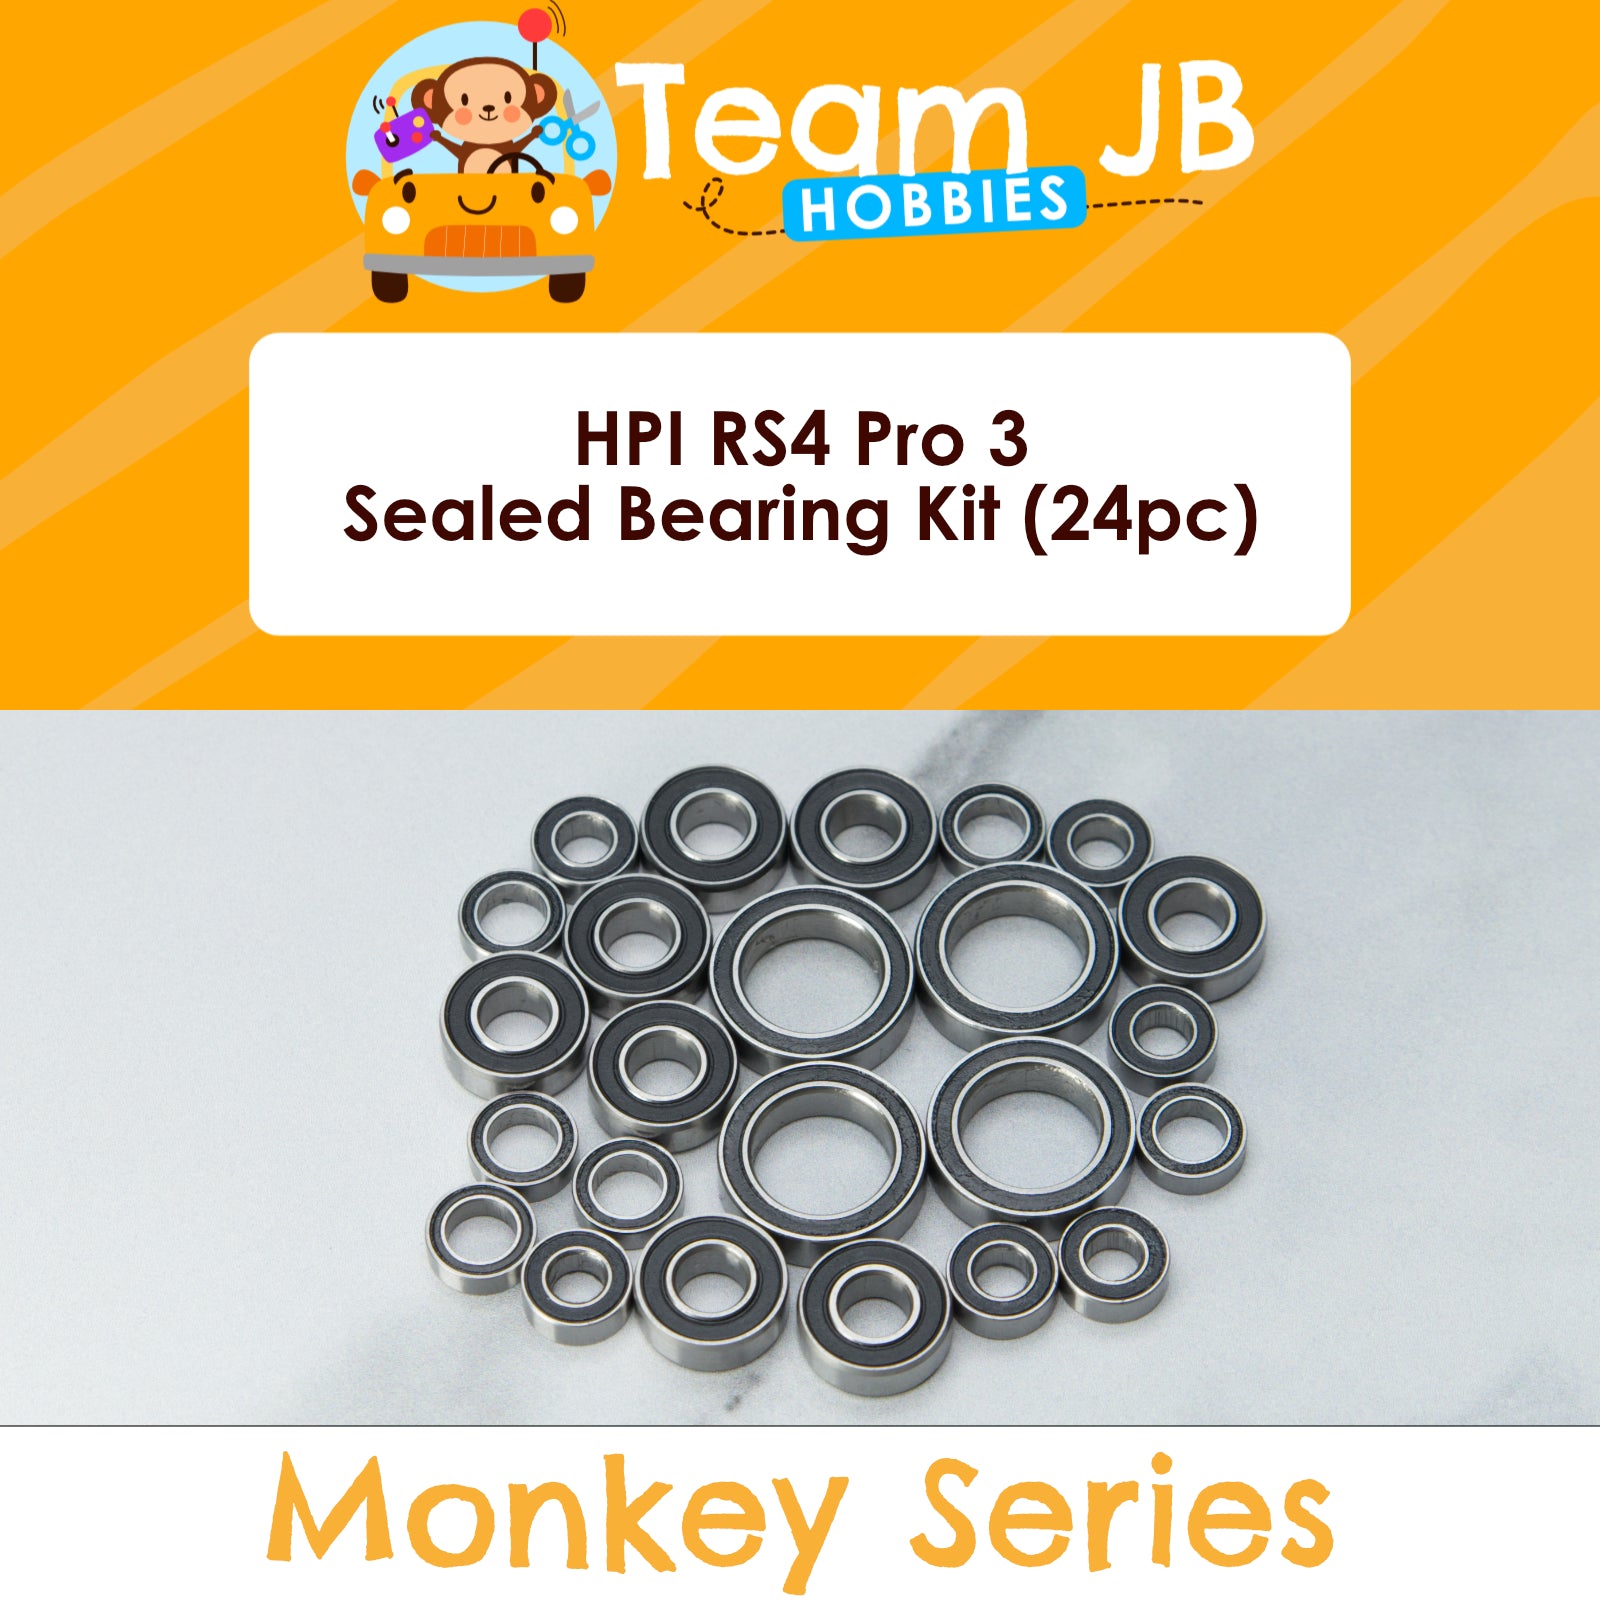 HPI RS4 Pro 3 - Sealed Bearing Kit